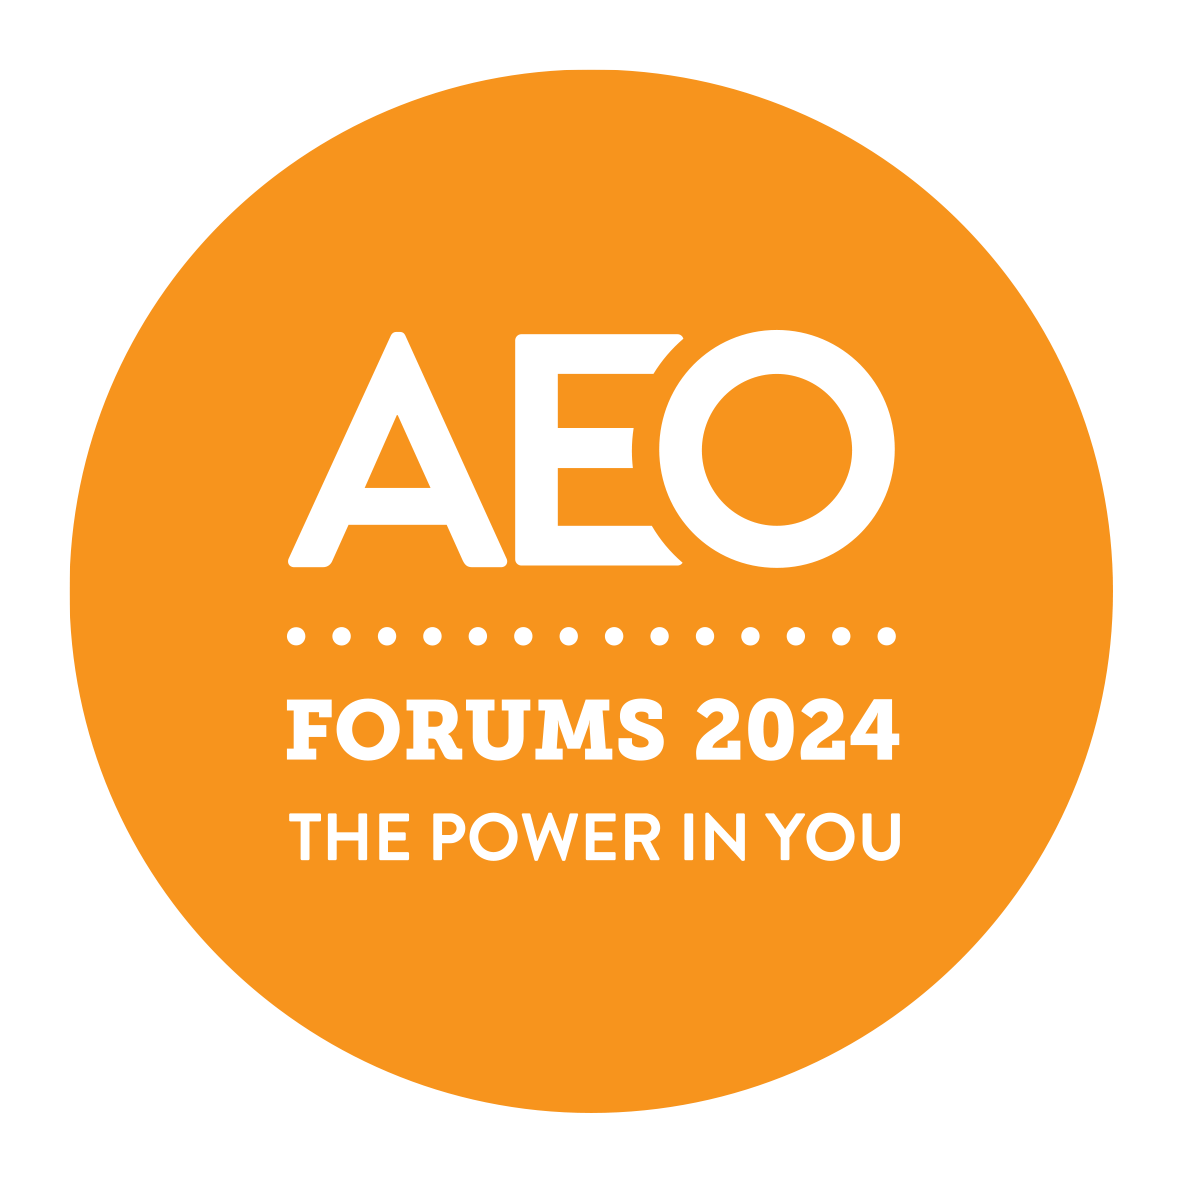 AEO Forums